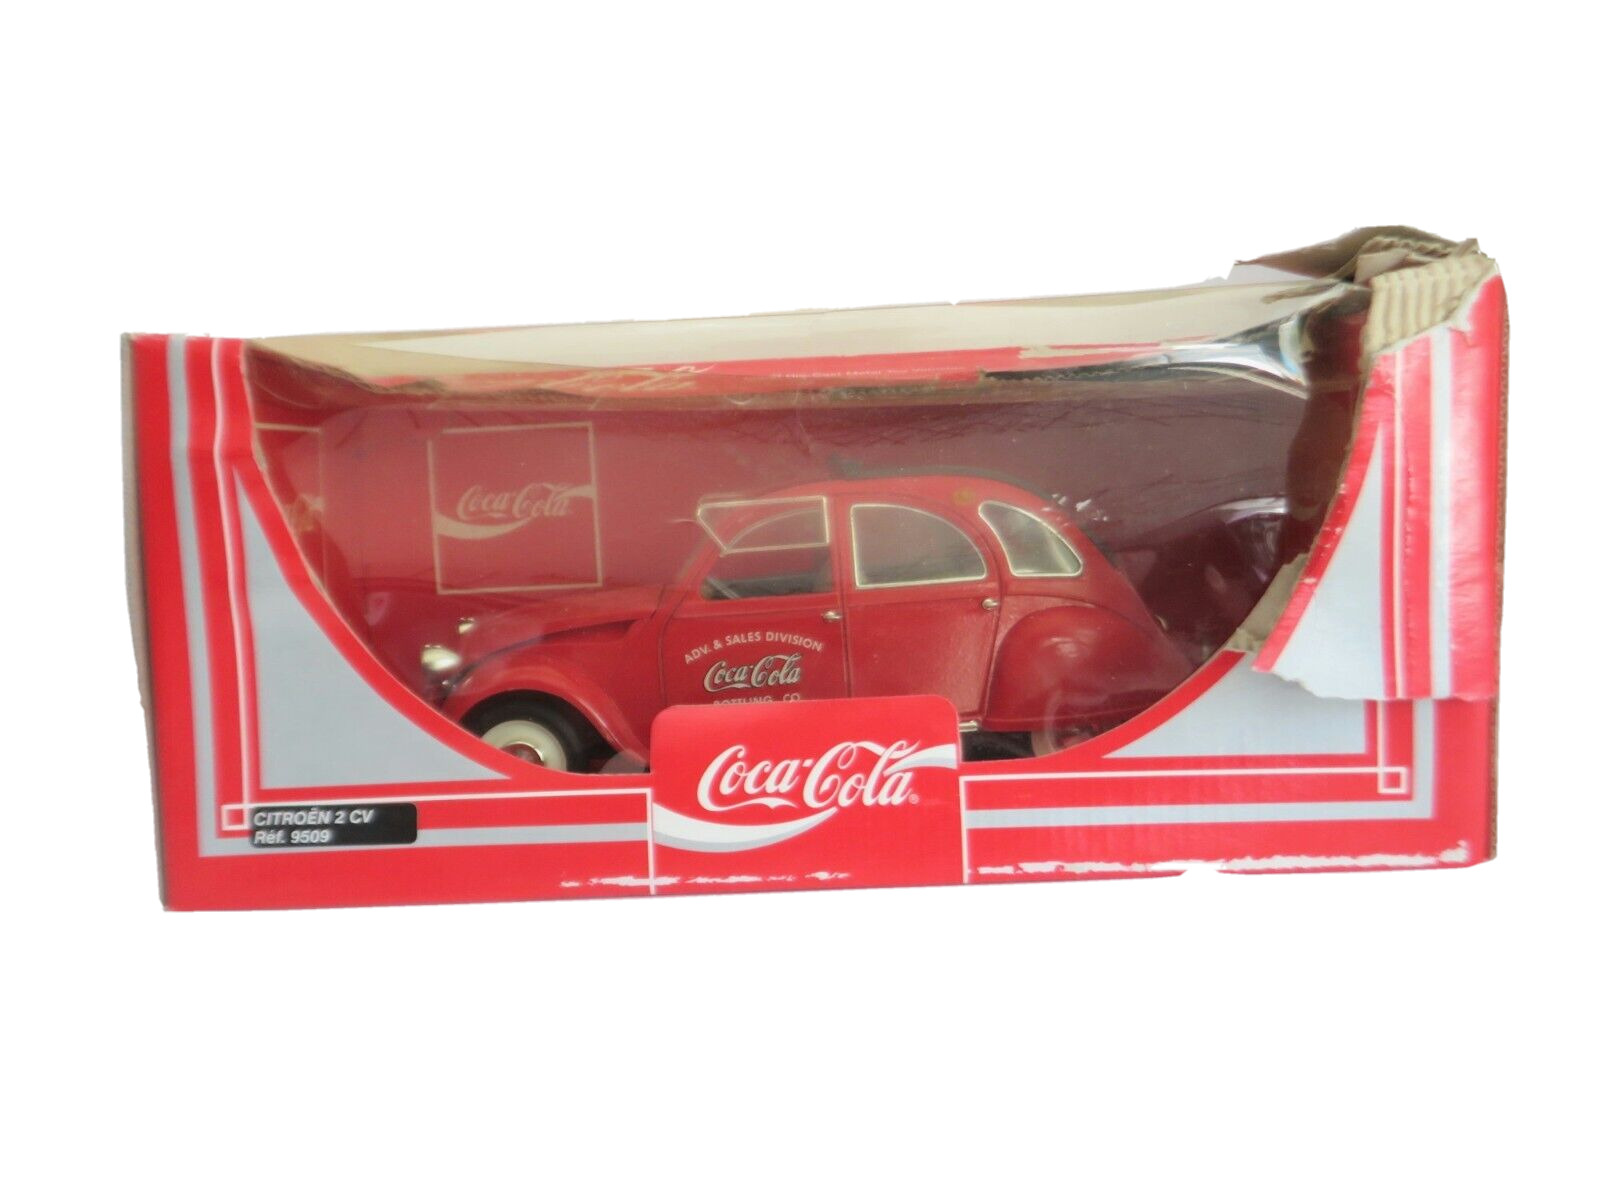 1998 Advertising Coca-Cola Car Citroen 2CV (Ref 9509) Die-Cast Metal Toy Vehicle